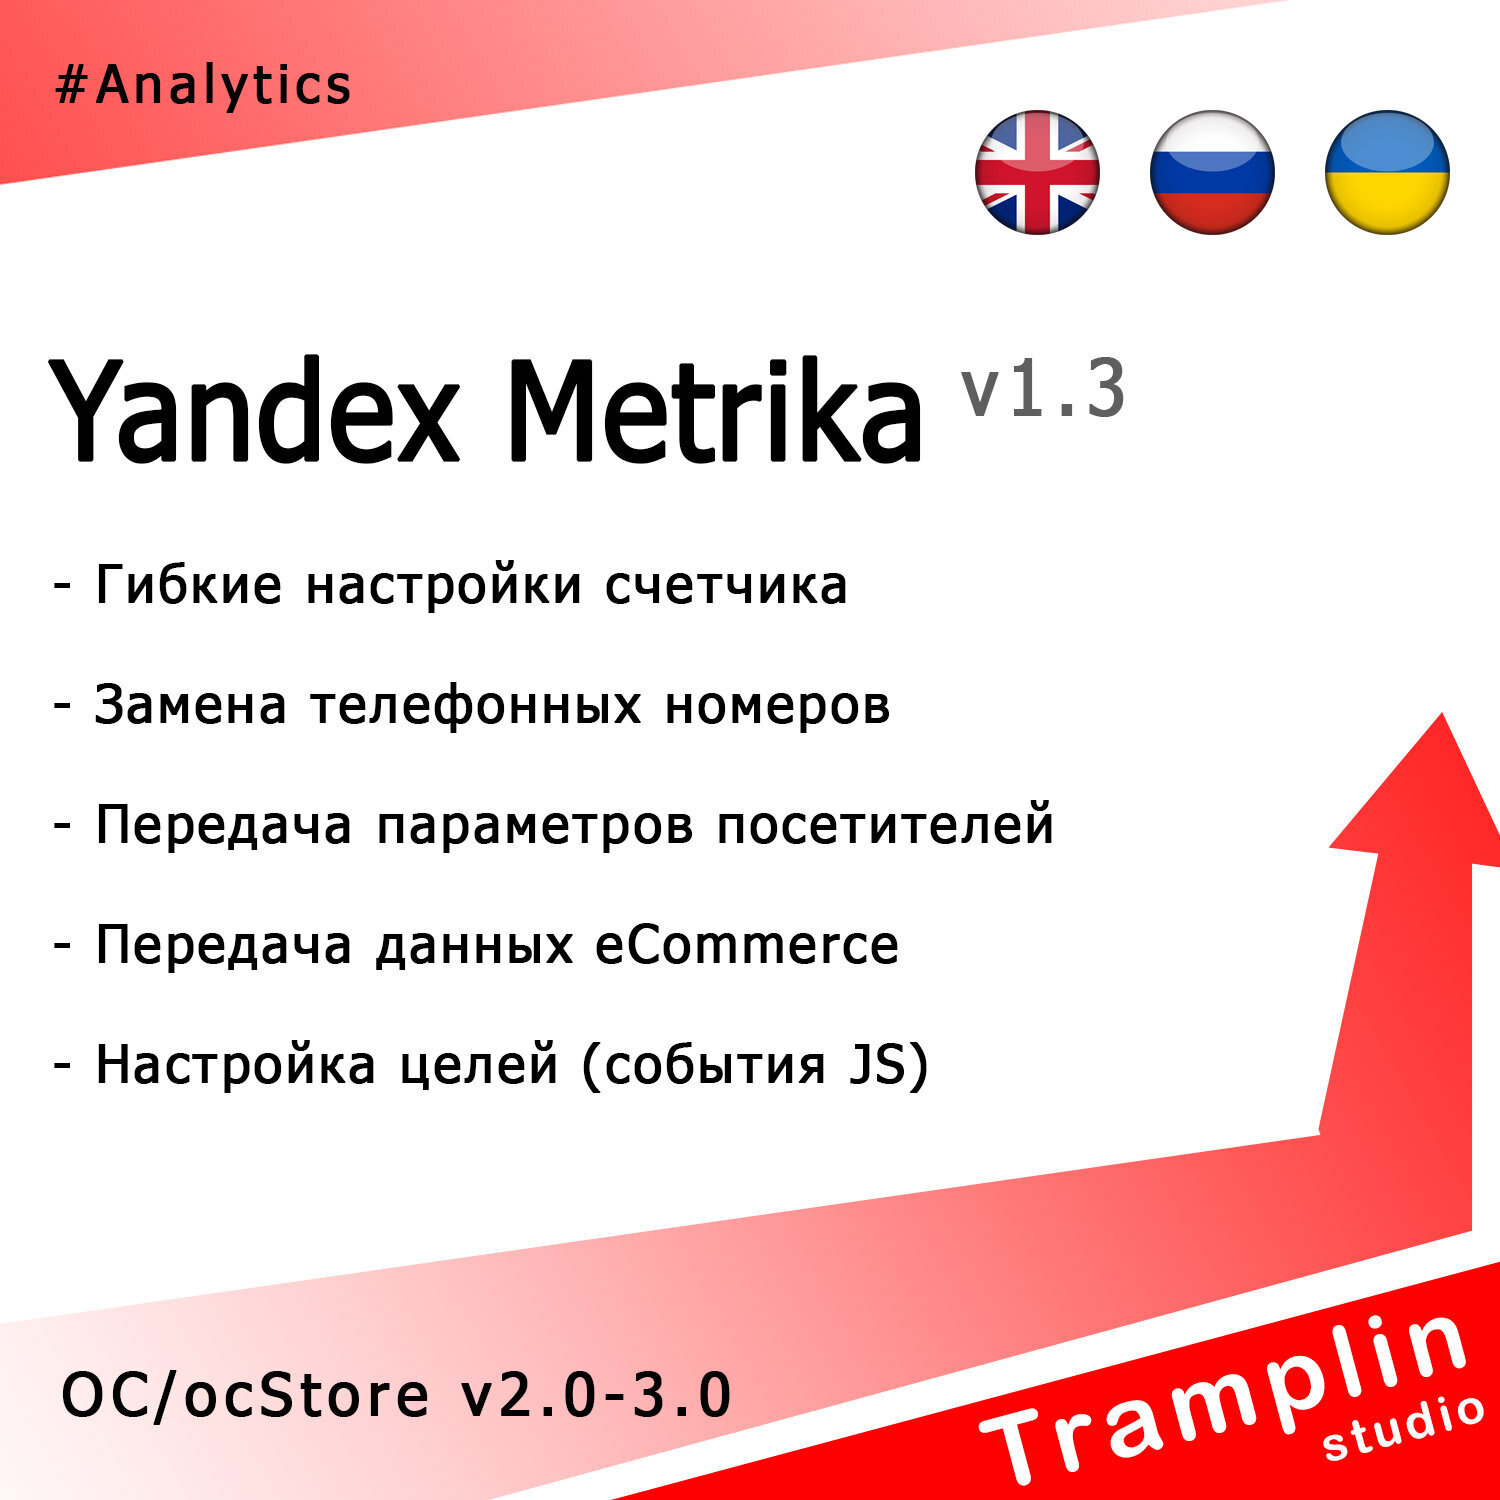 TS Yandex Metrika 1.3